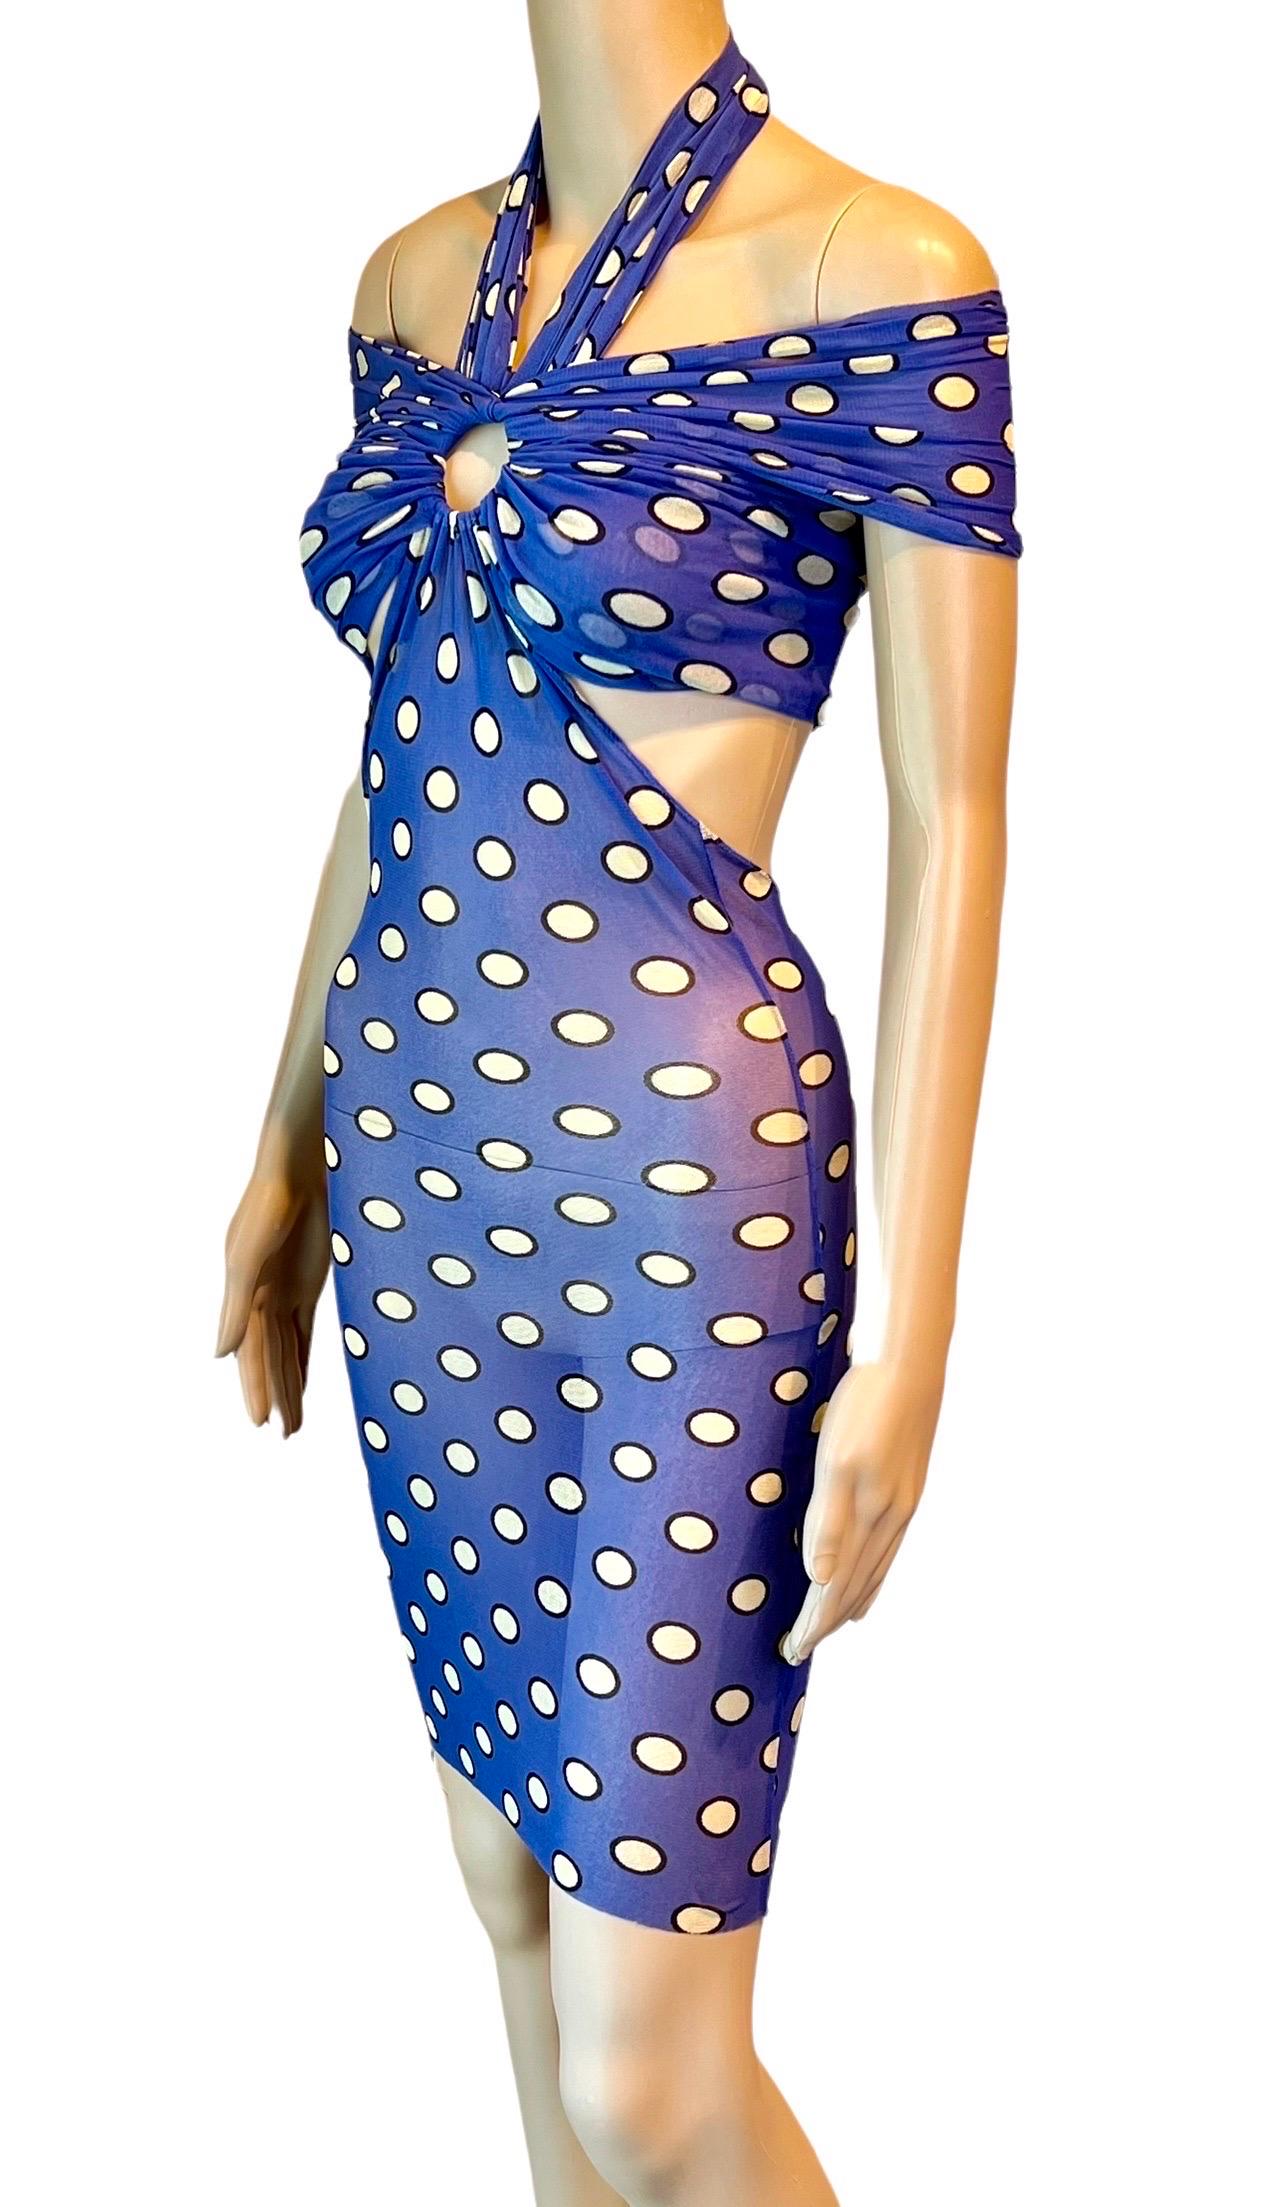 Jean Paul Gaultier Soleil S/S 1999 Cutout Polka Dot Mesh Bodycon Mini Dress For Sale 1